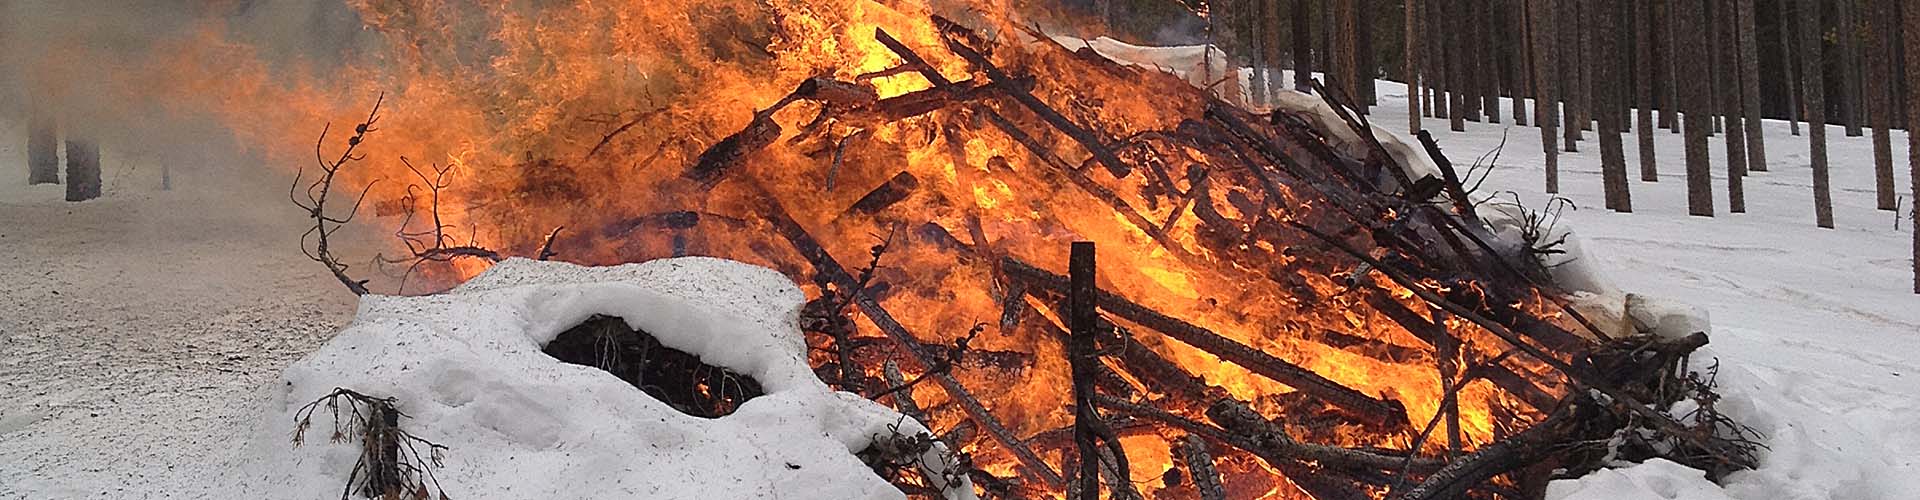 Slash pile for Burn permits